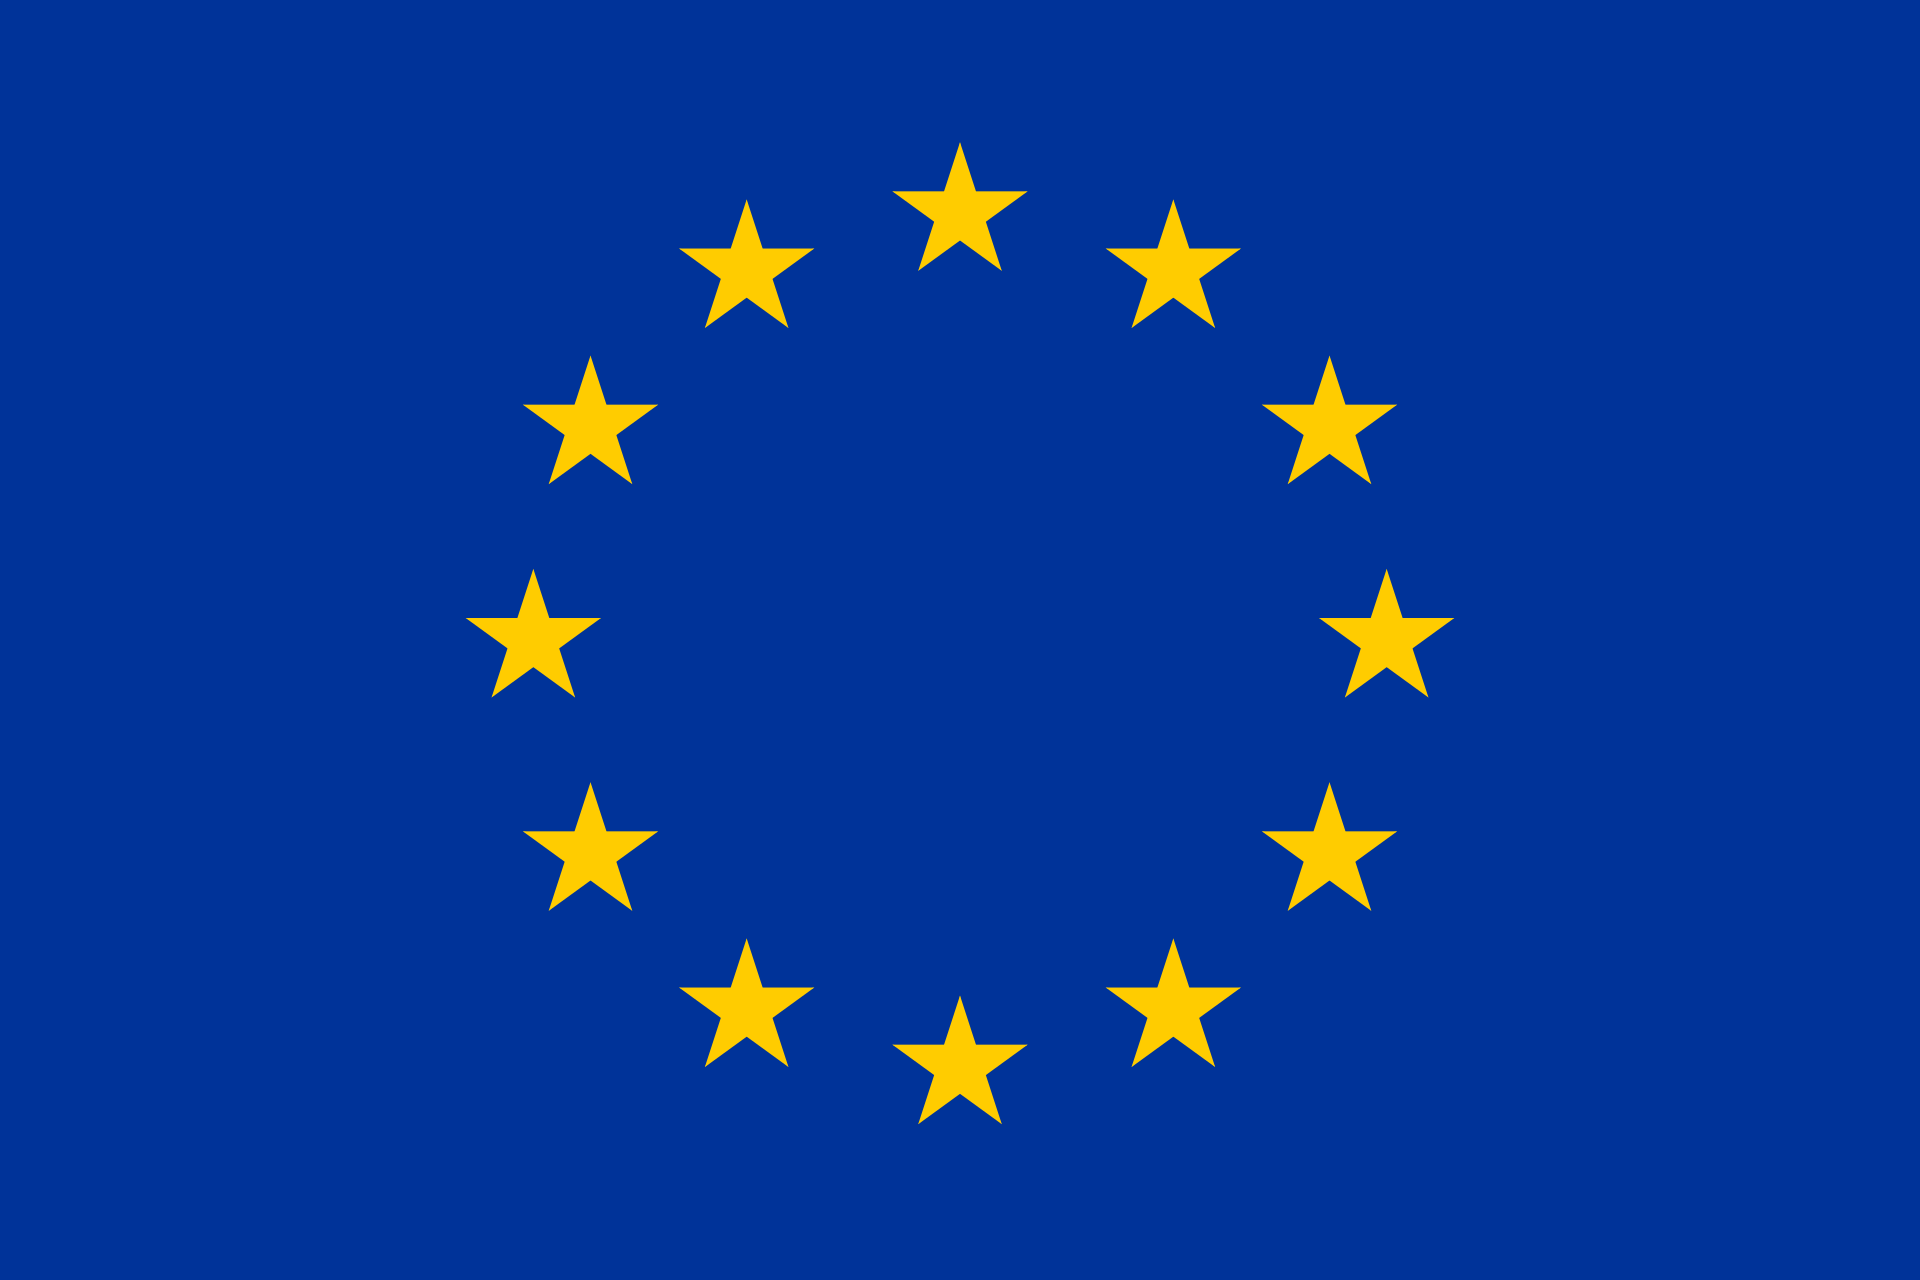 EUROPE